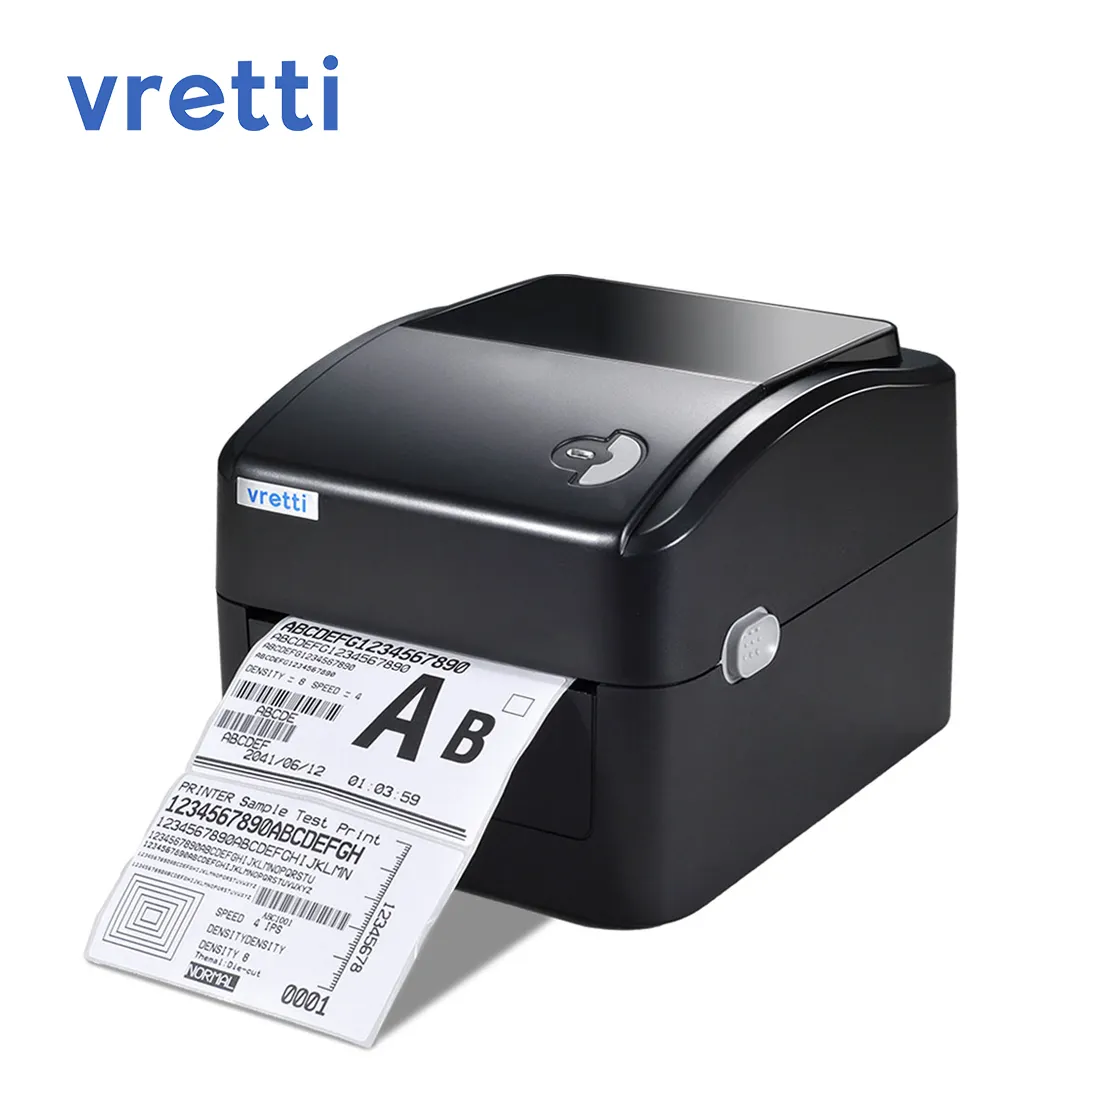 Grosir printer label termal, cocok untuk UPS, USPS, label DHL express.